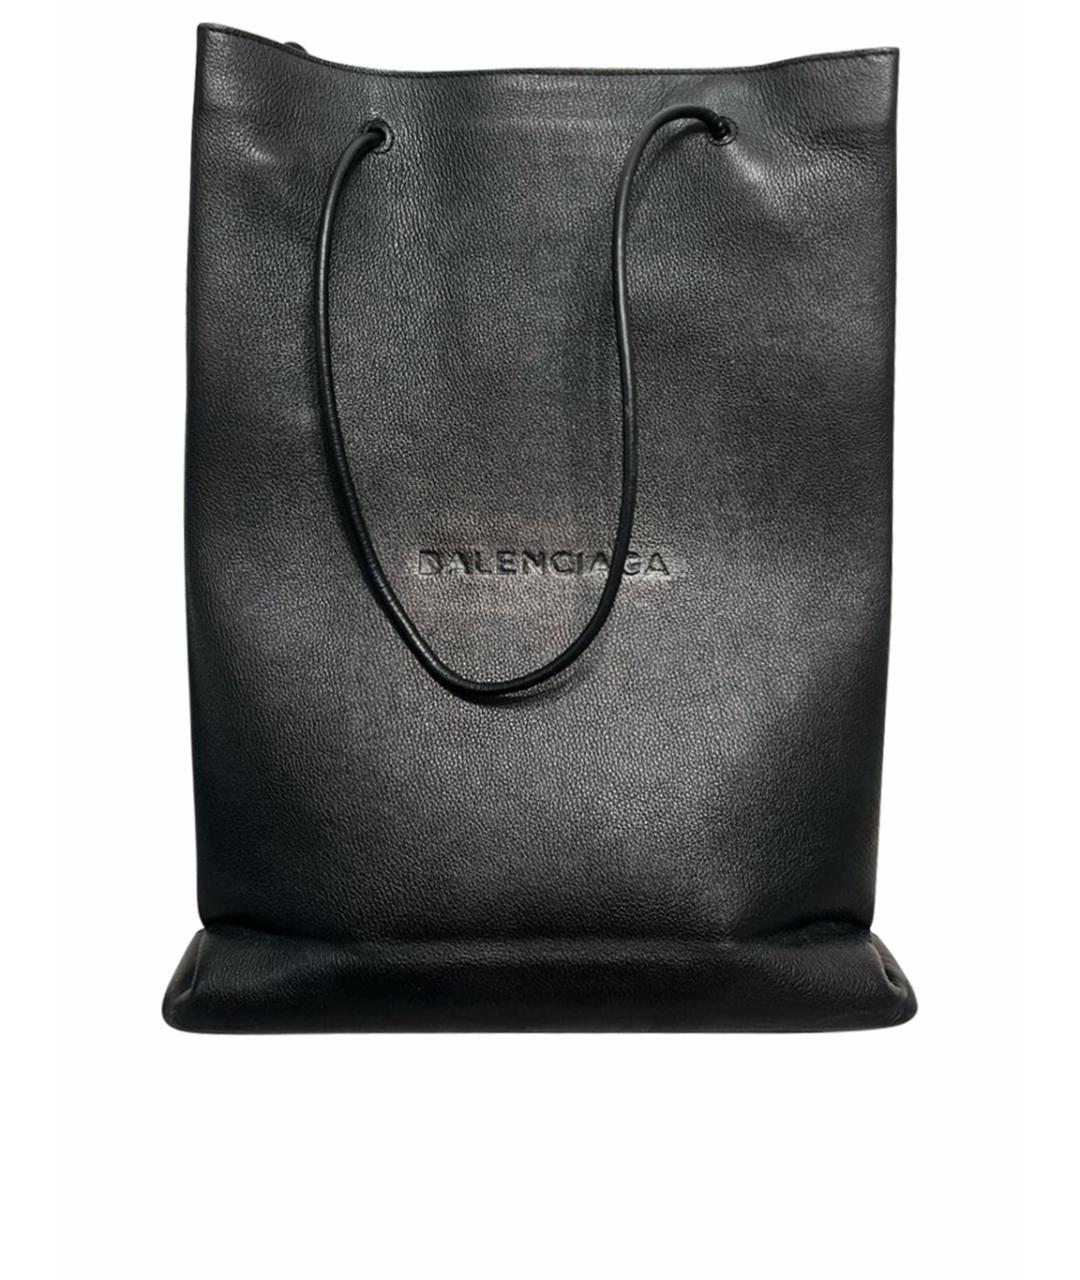 BALENCIAGA Черная кожаная сумка с короткими ручками, фото 1